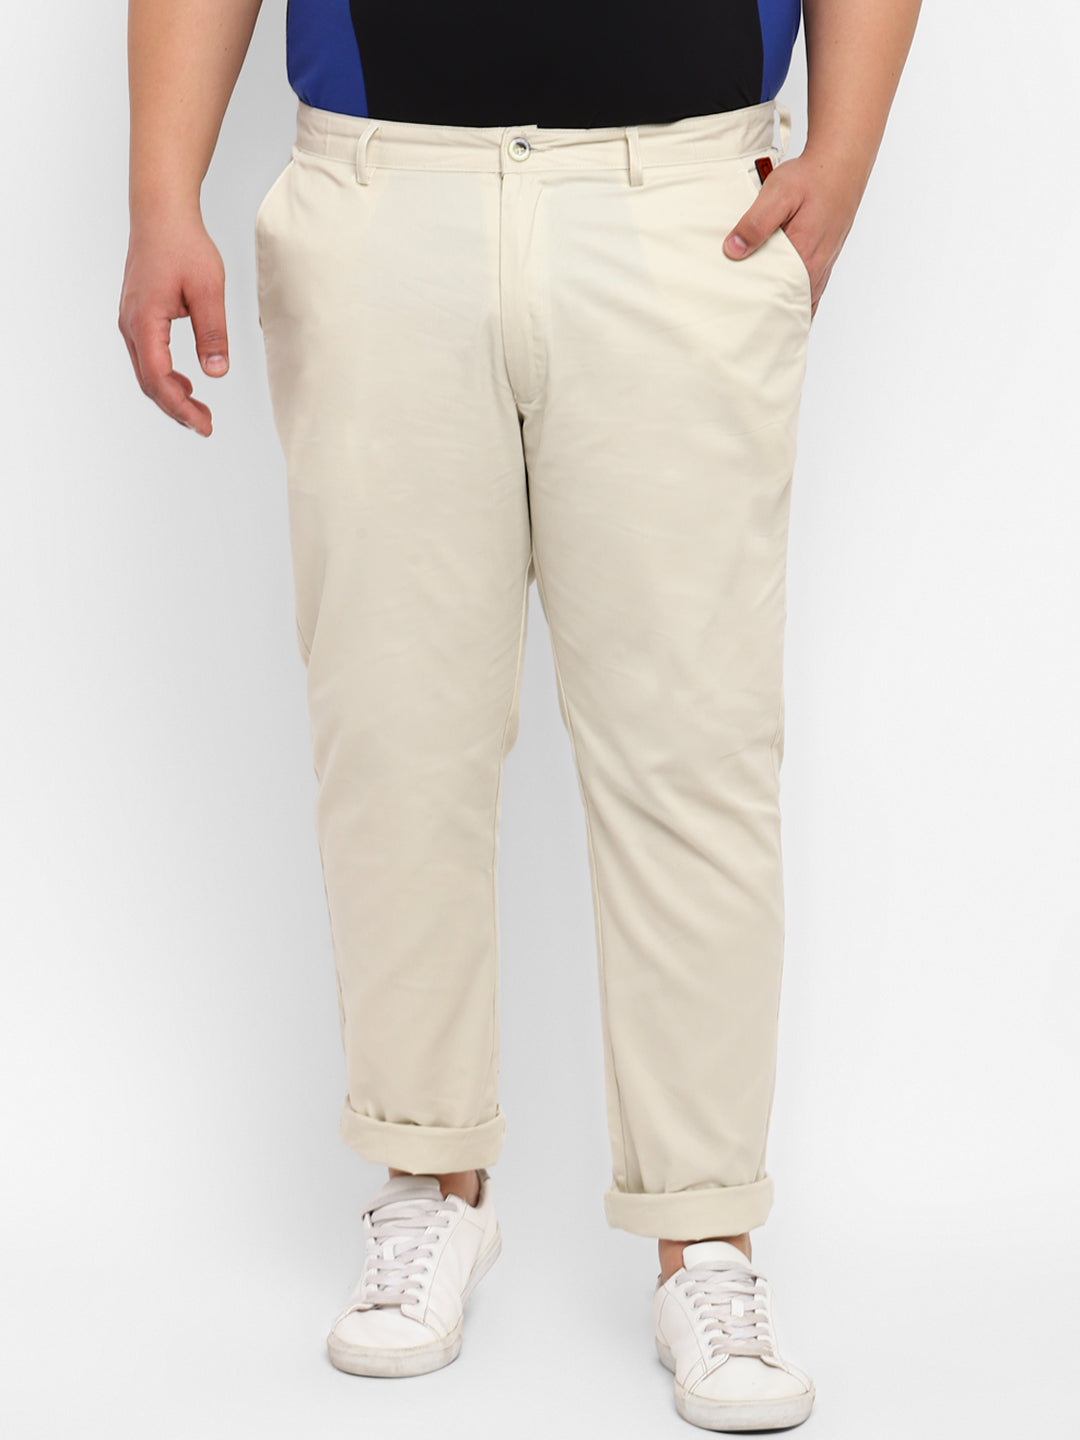 Cream Slim Fit Cotton Lycra Pants for Men by GentWith.com | Slim fit cotton  pants, Slim fit pants men, Men's casual style